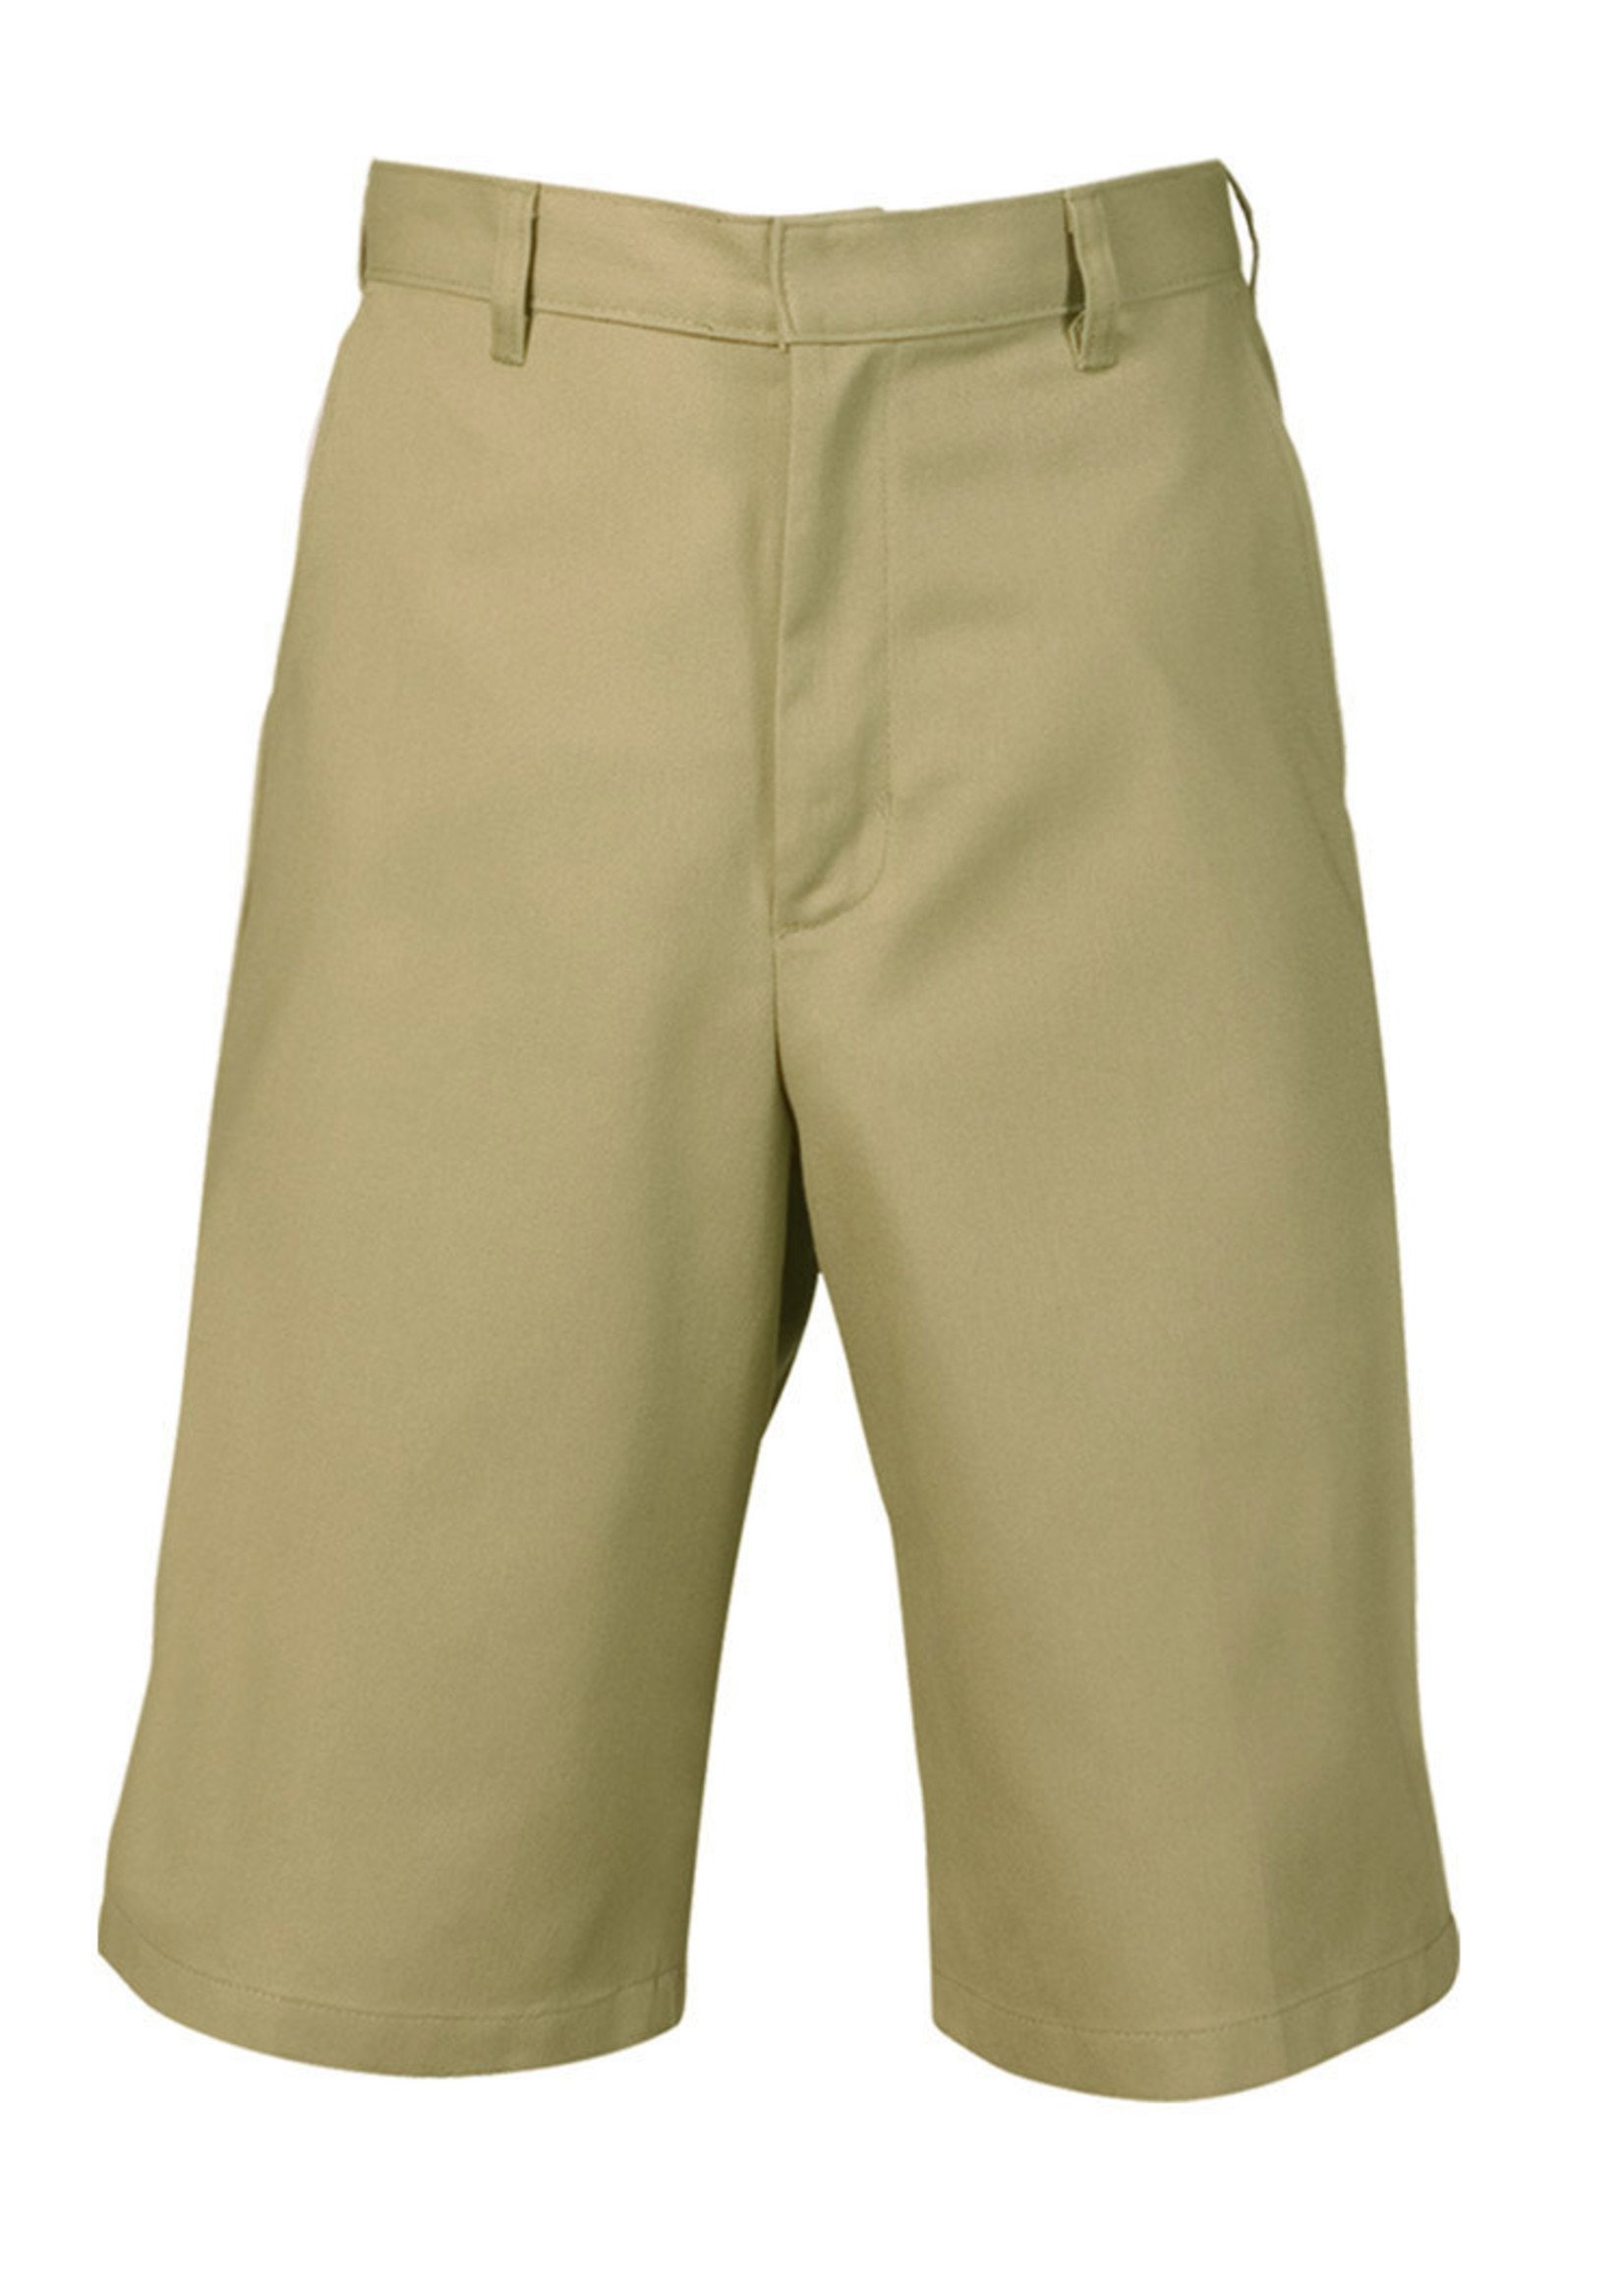 A+ Mens Flat Front Shorts (BK)